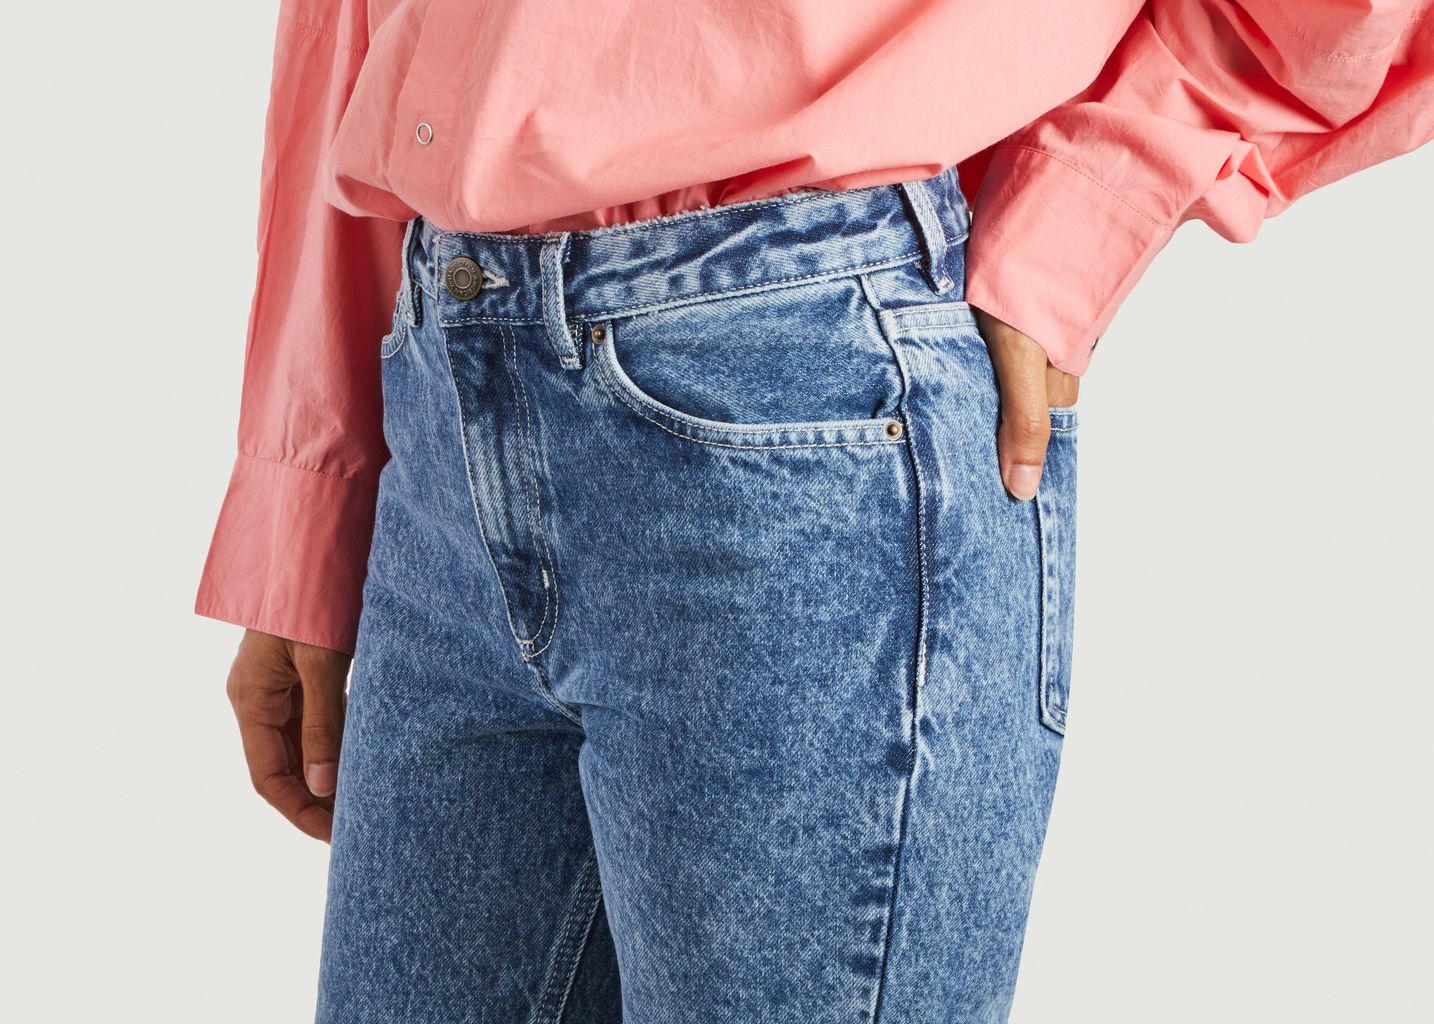 Wipy high waist slim fit jeans - American Vintage